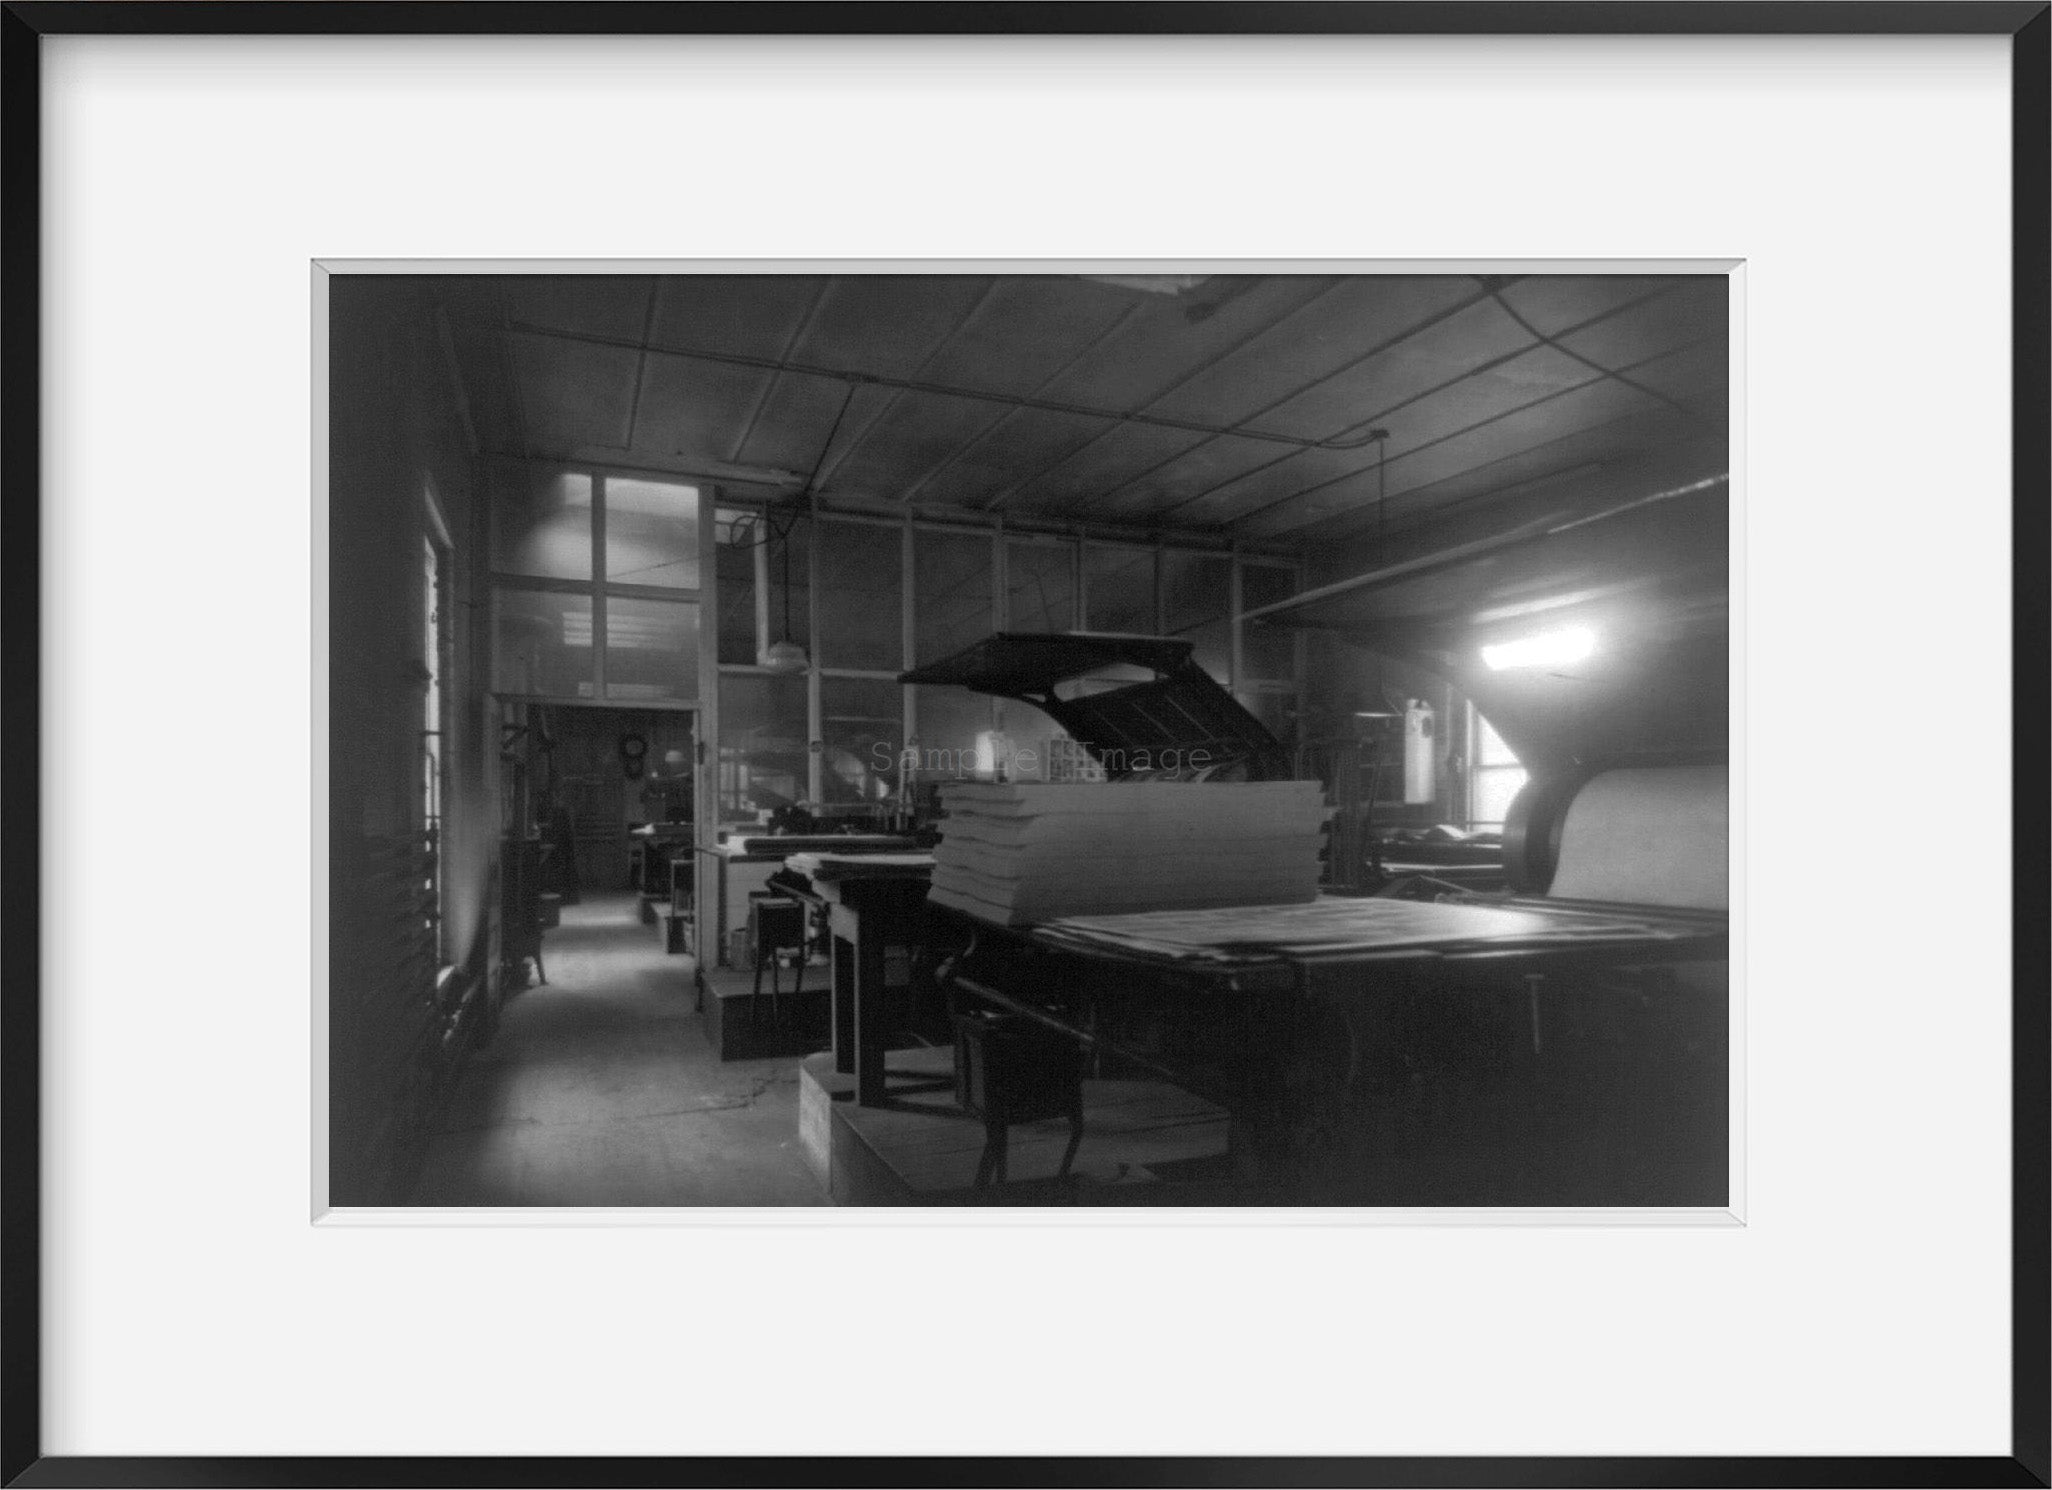 Photo: The Albertype Company, Postcard Factory, 250 Adams Street, Brooklyn, New York